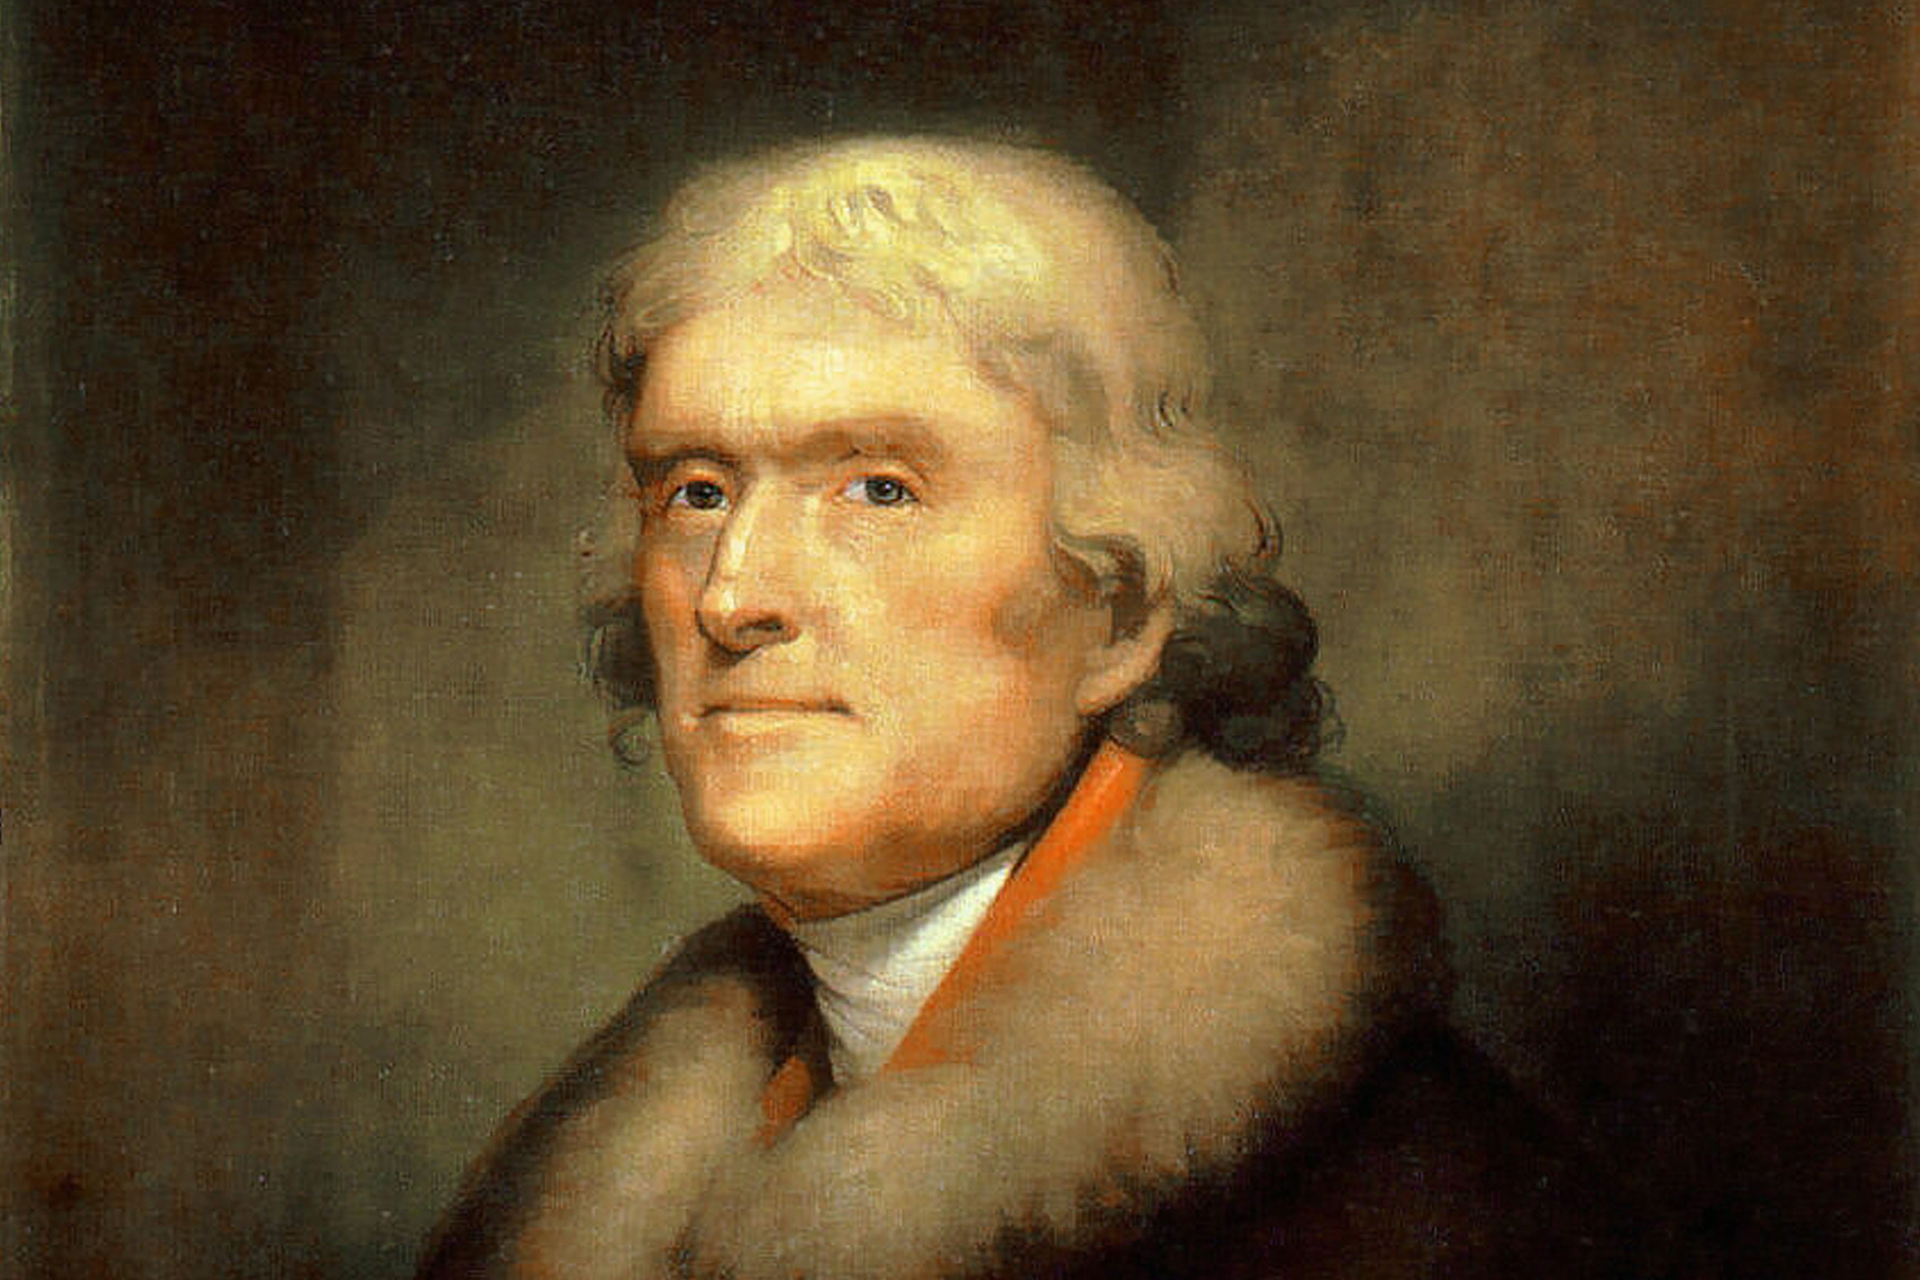 ⛔ Thomas jefferson impact. What positive impact did Thomas Jefferson